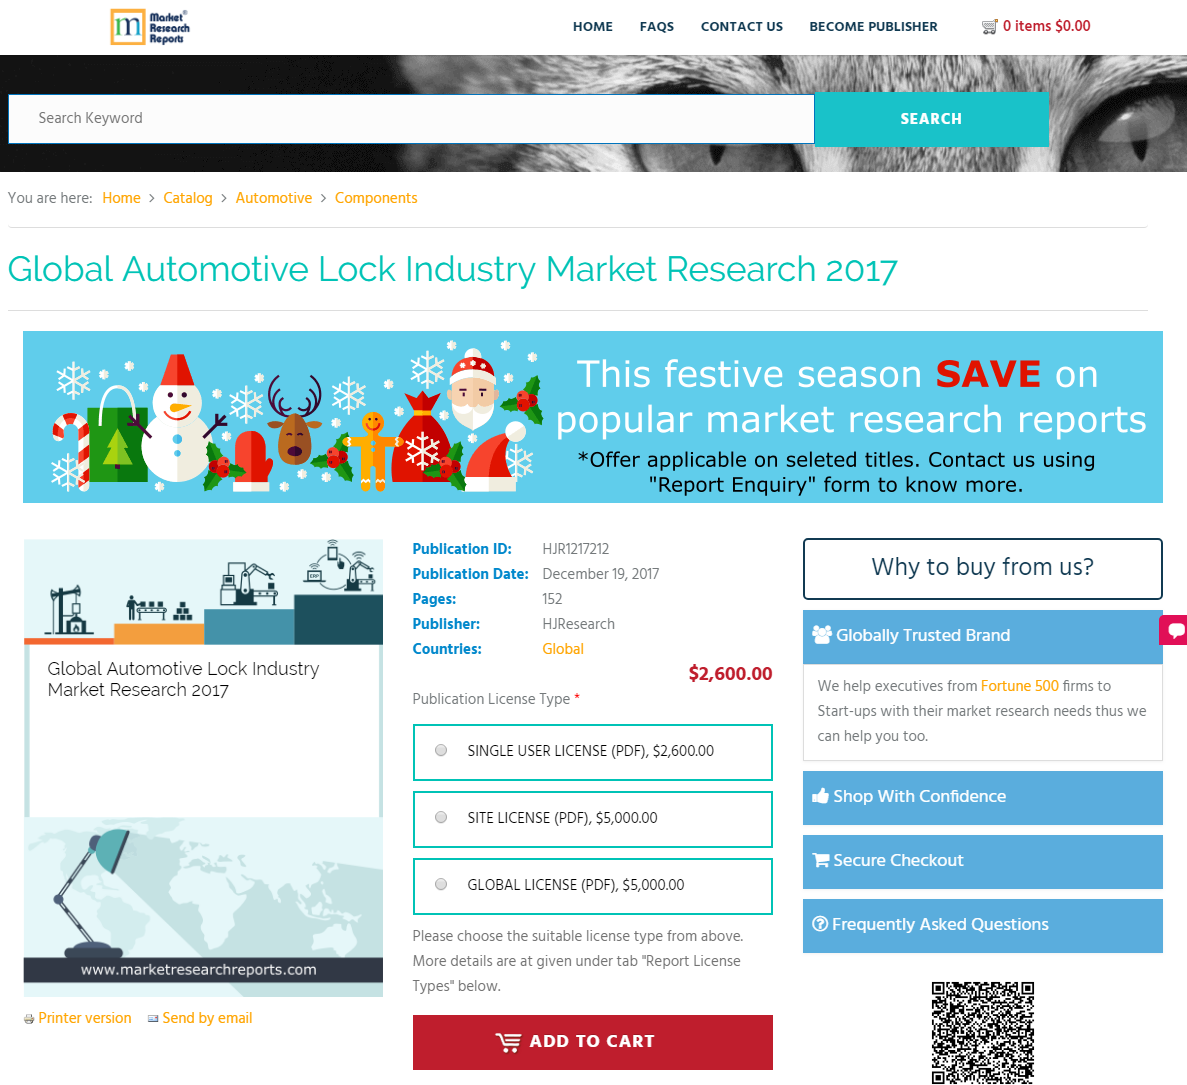 Global Automotive Lock Industry Market Research 2017'